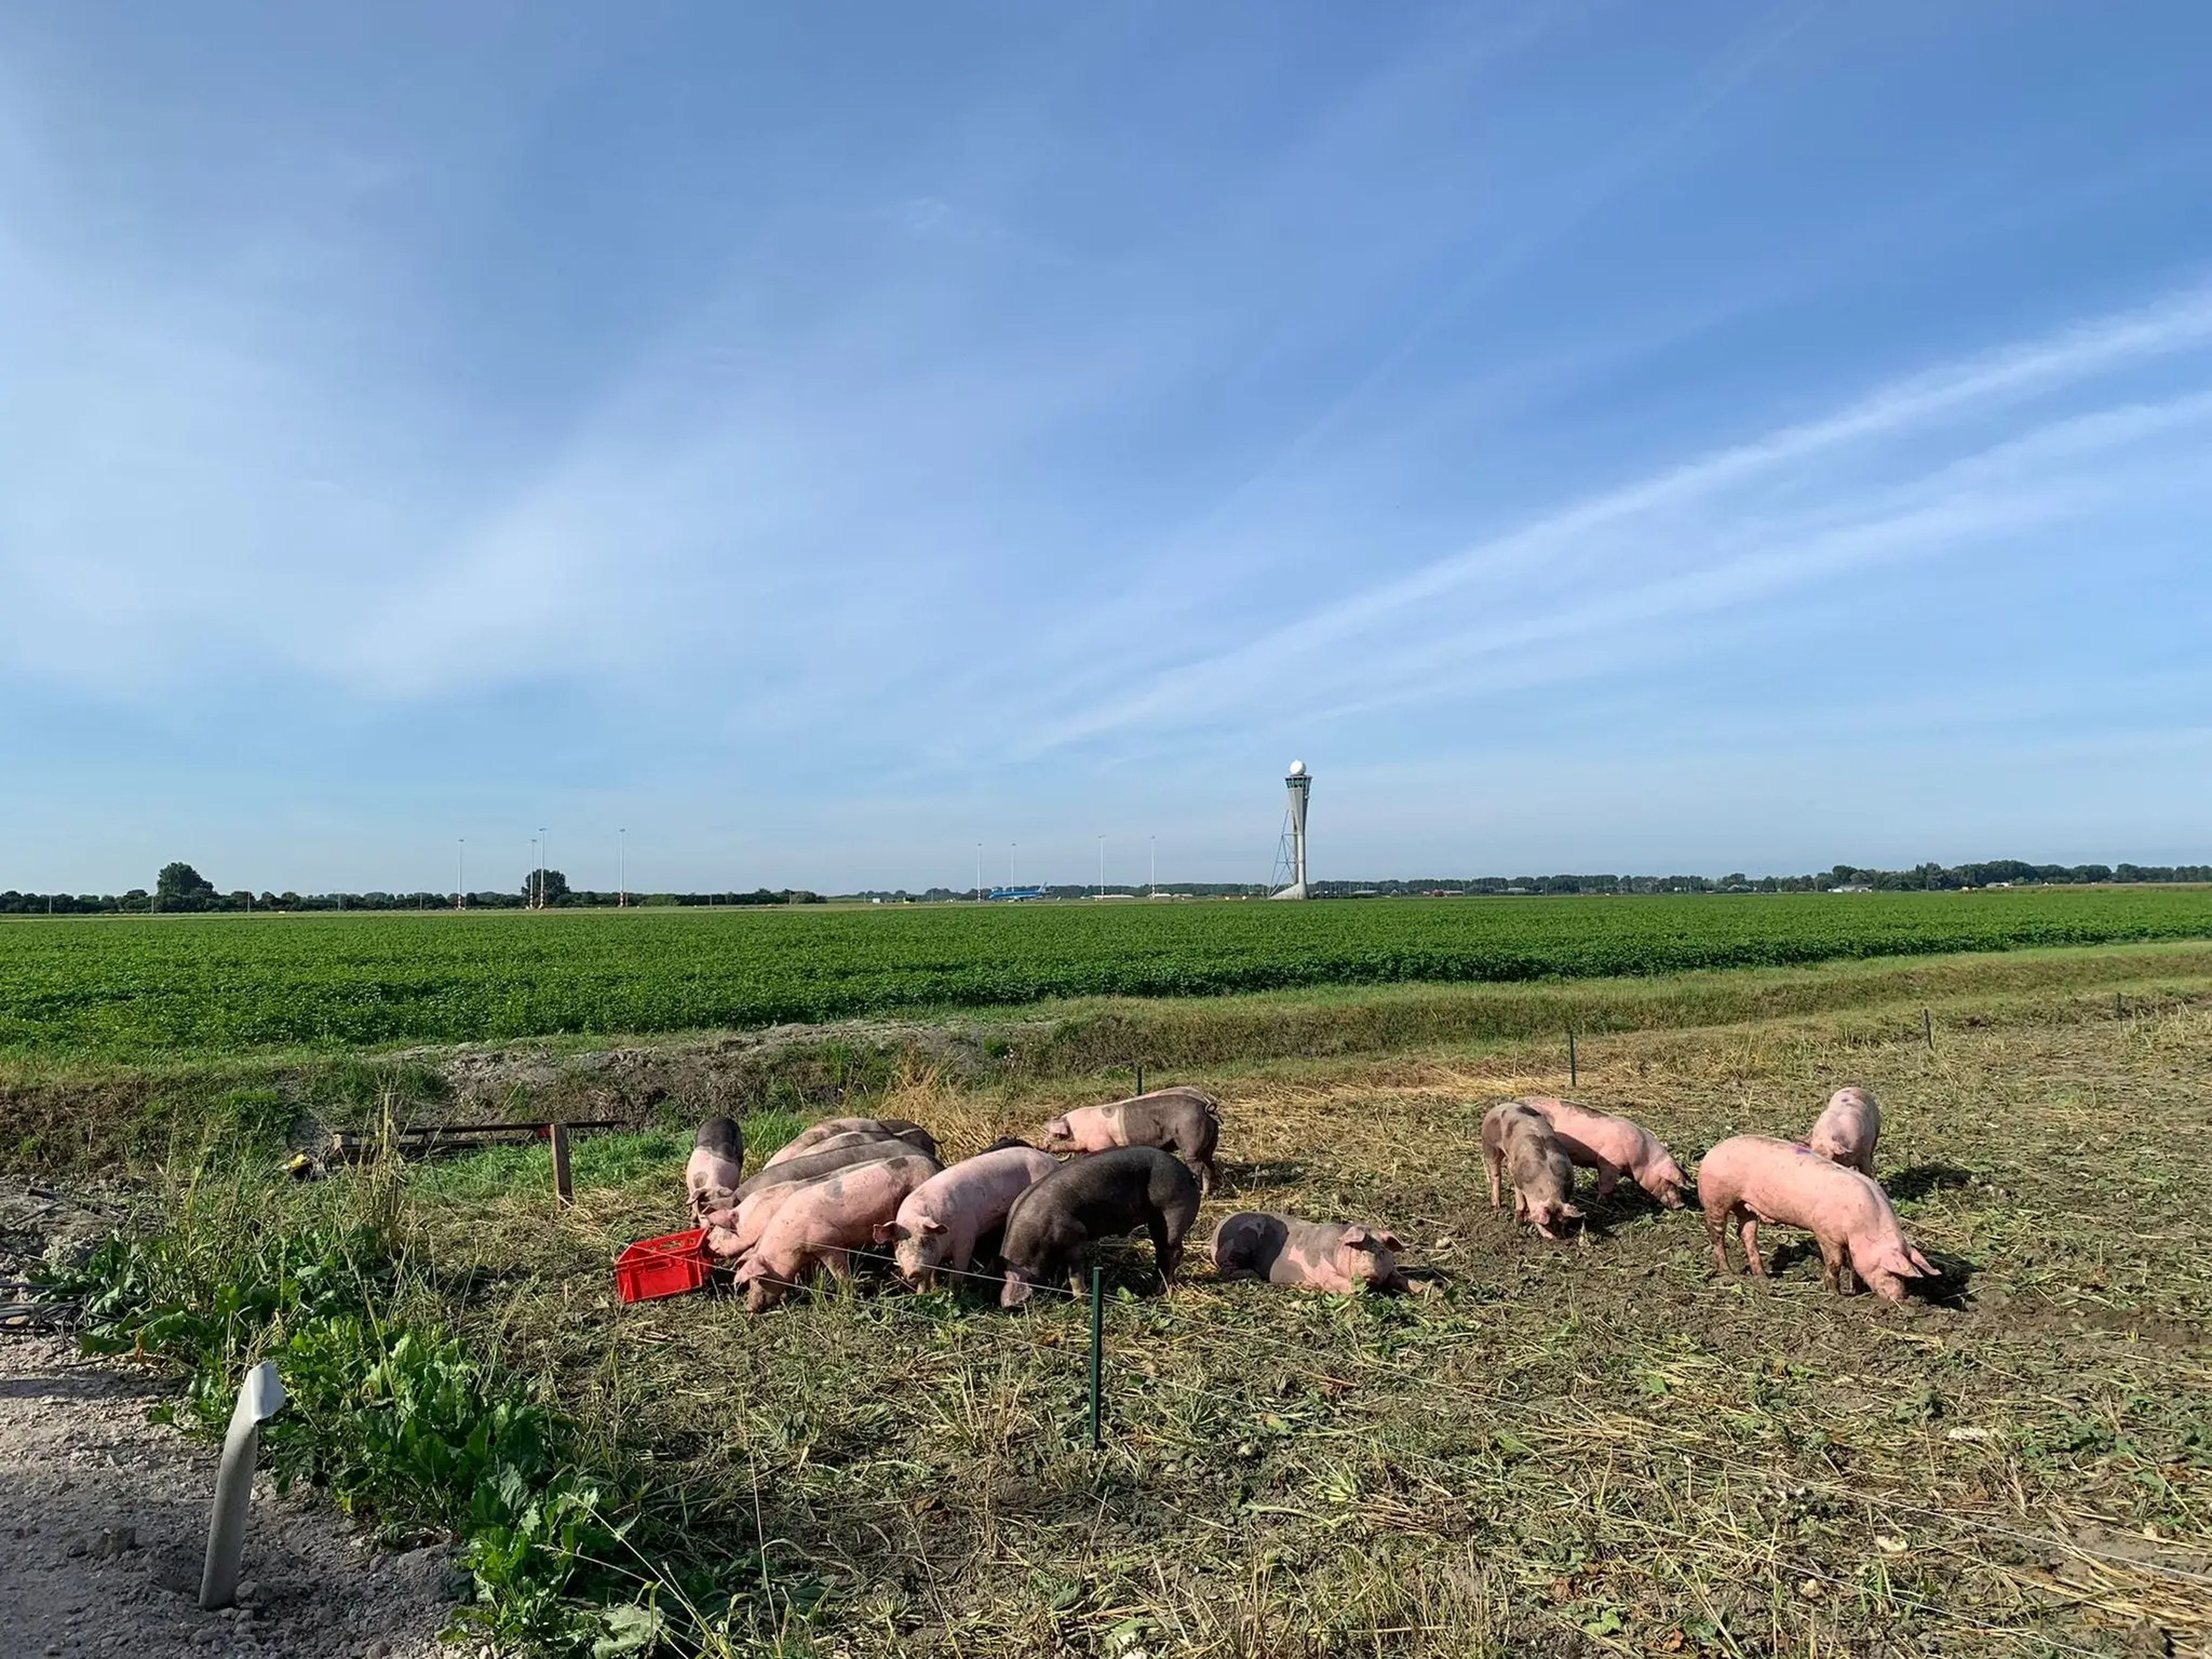 Schiphol pigs